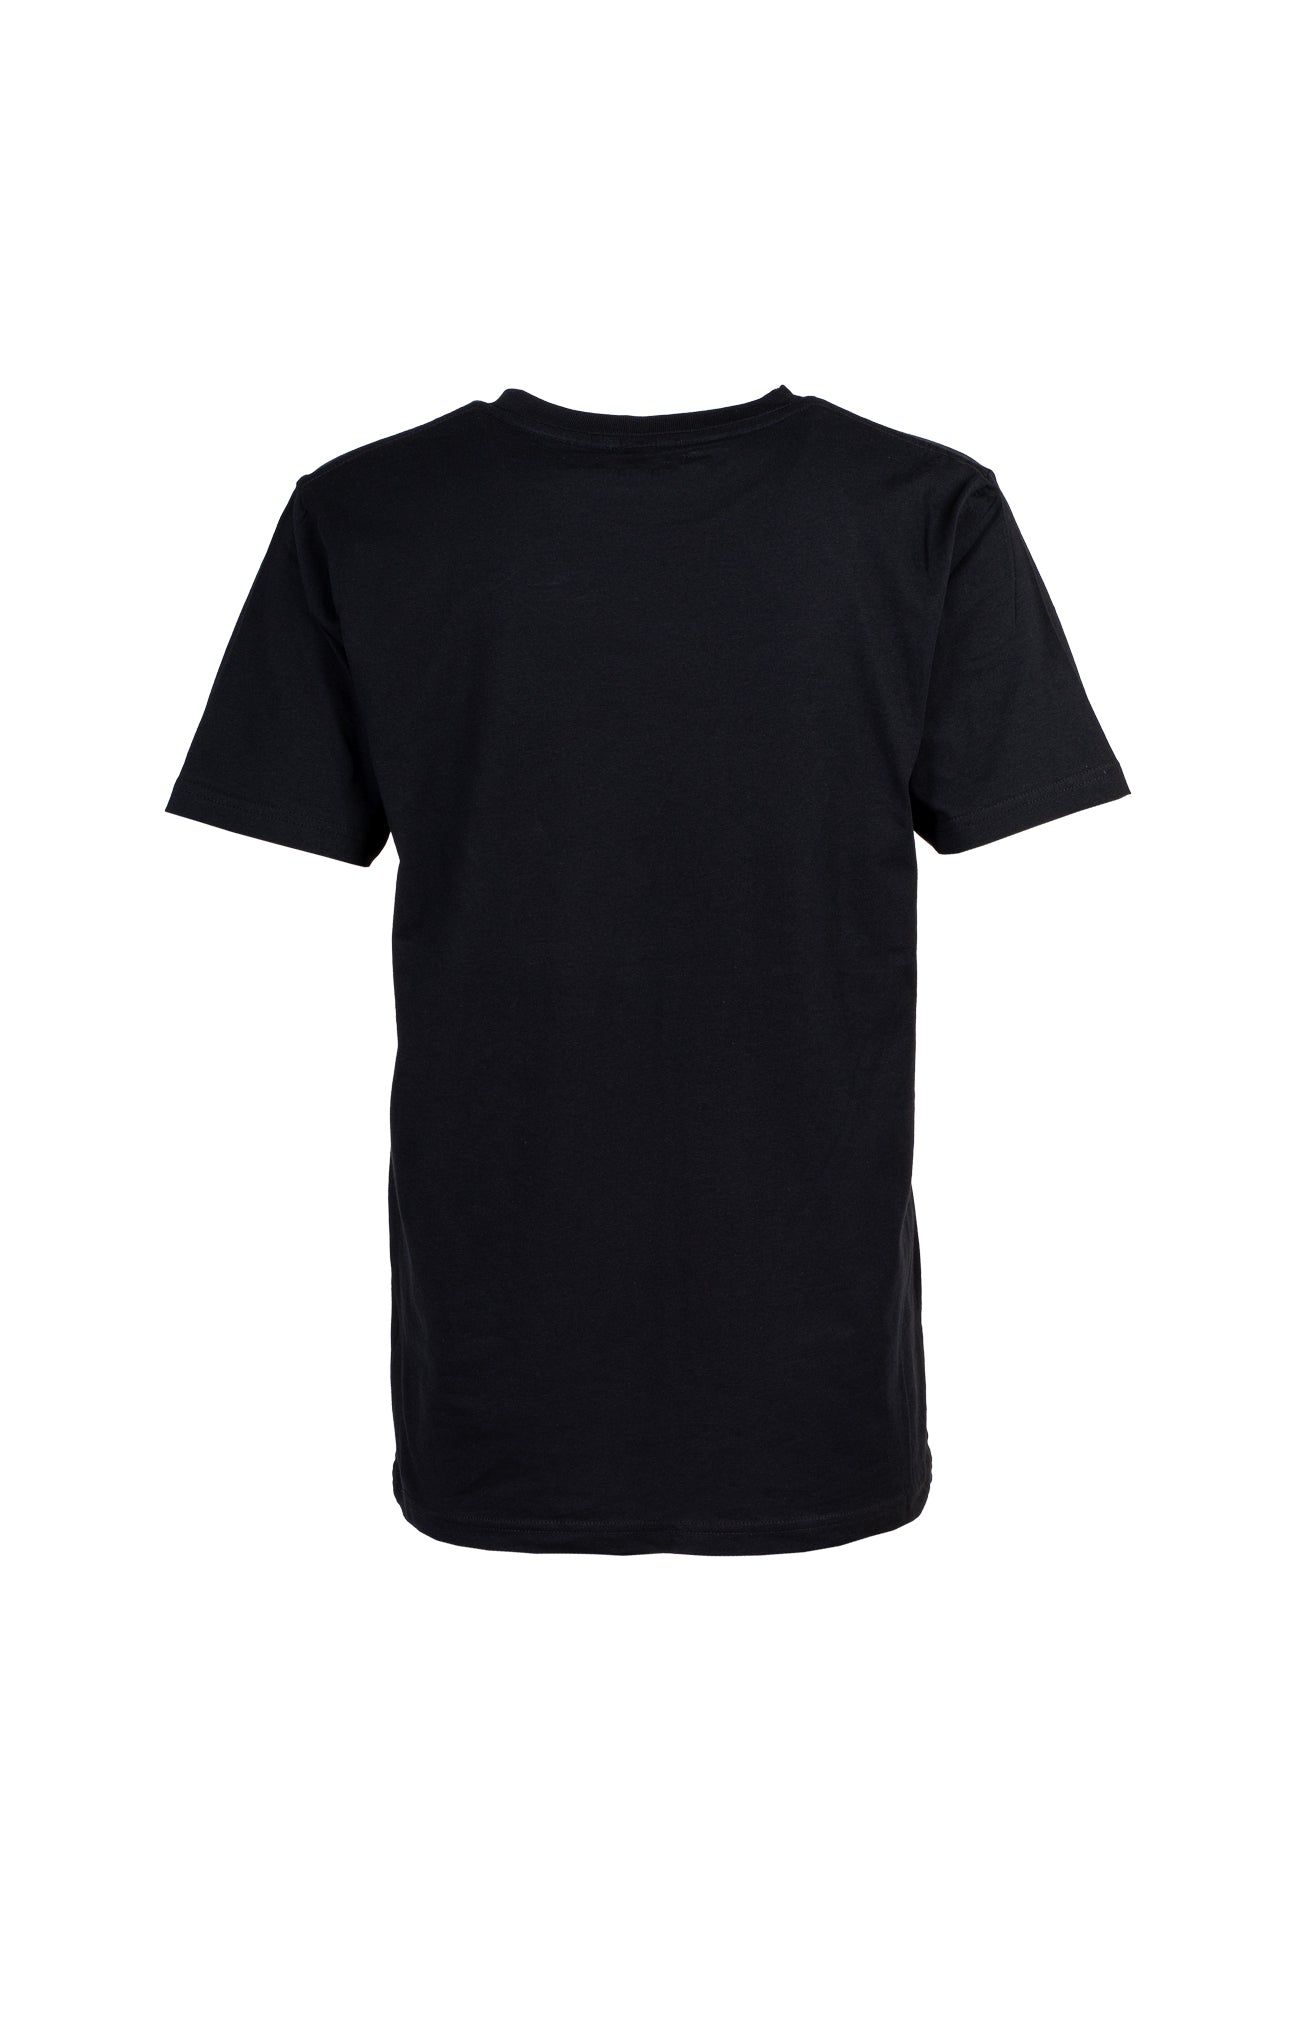 STARFLOWER T-shirt 'black'